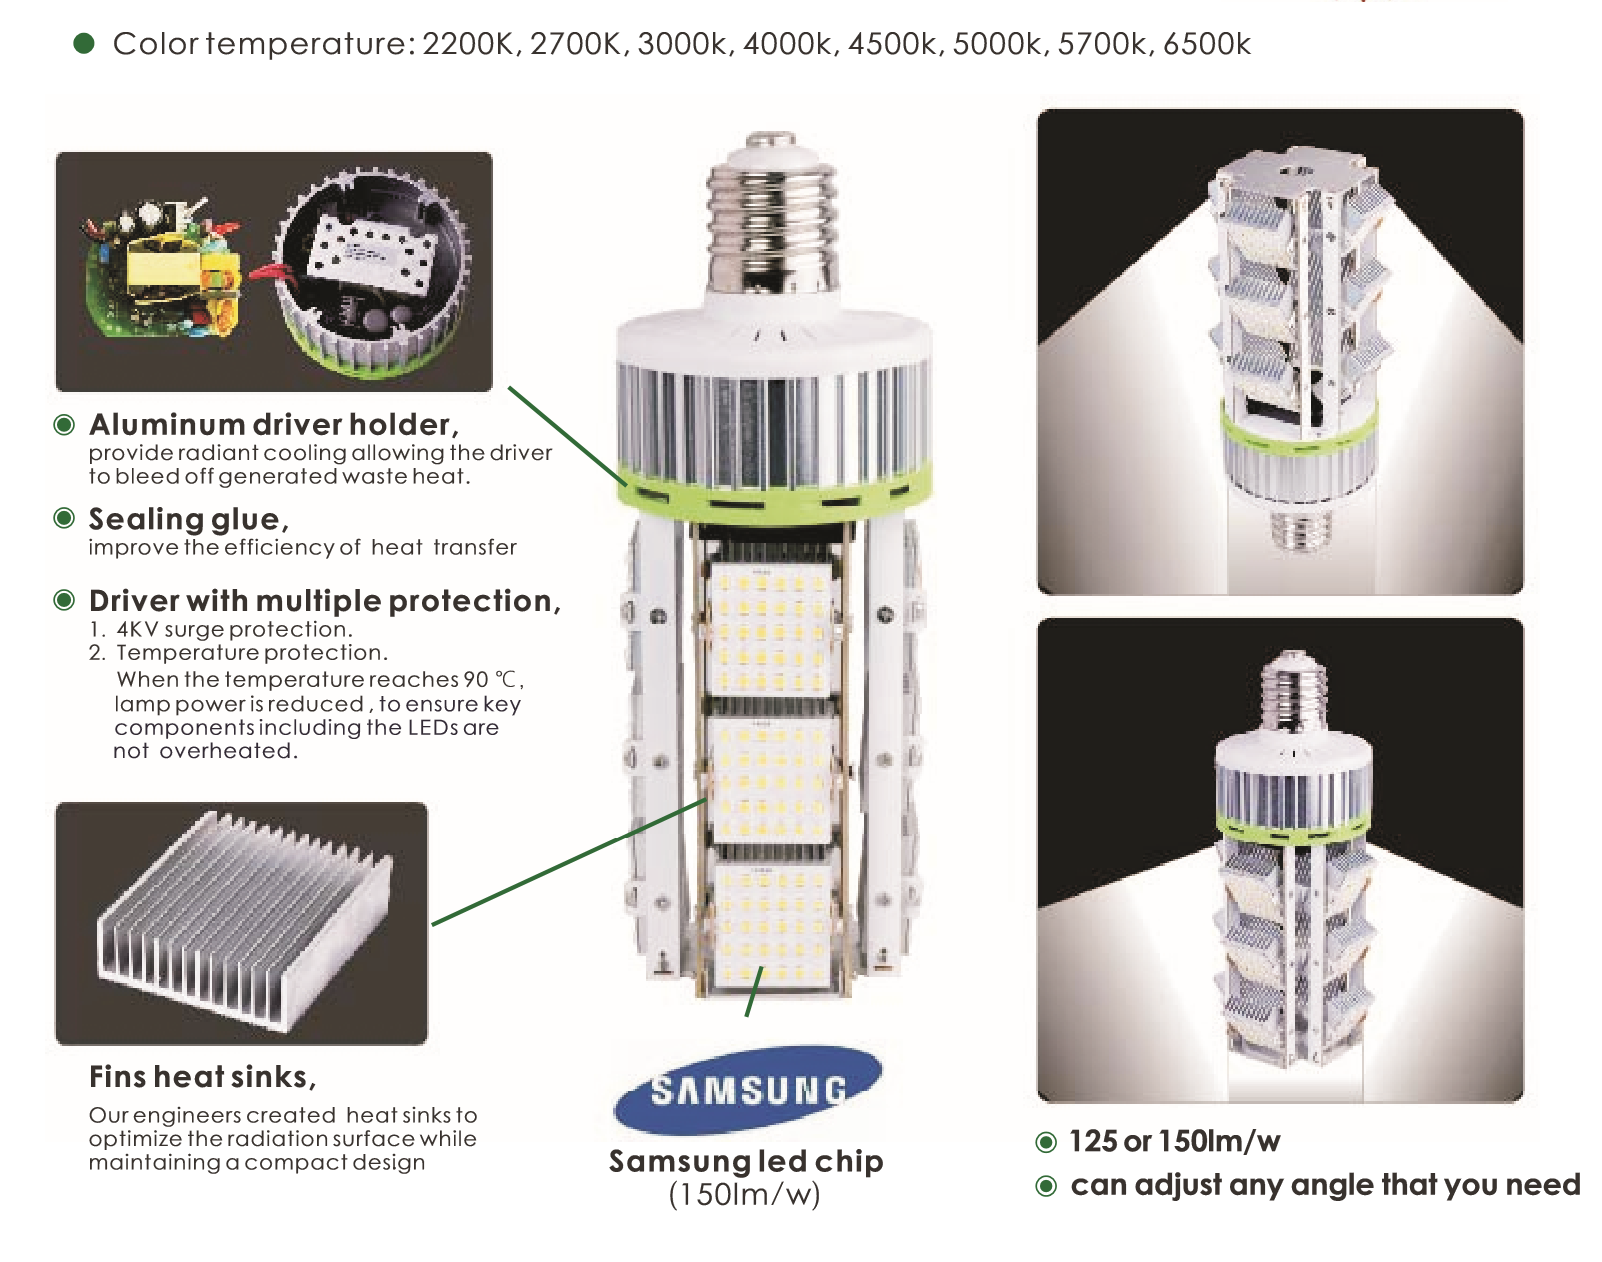 Led Module Adjustable Light | Led Light Module Adjustable Light | LED Light Bulbs | street light LED Light Bulbs | led street light bulb replacement | LED Retrofit Street Lighting | LED Parking Lot | LED Street Lights